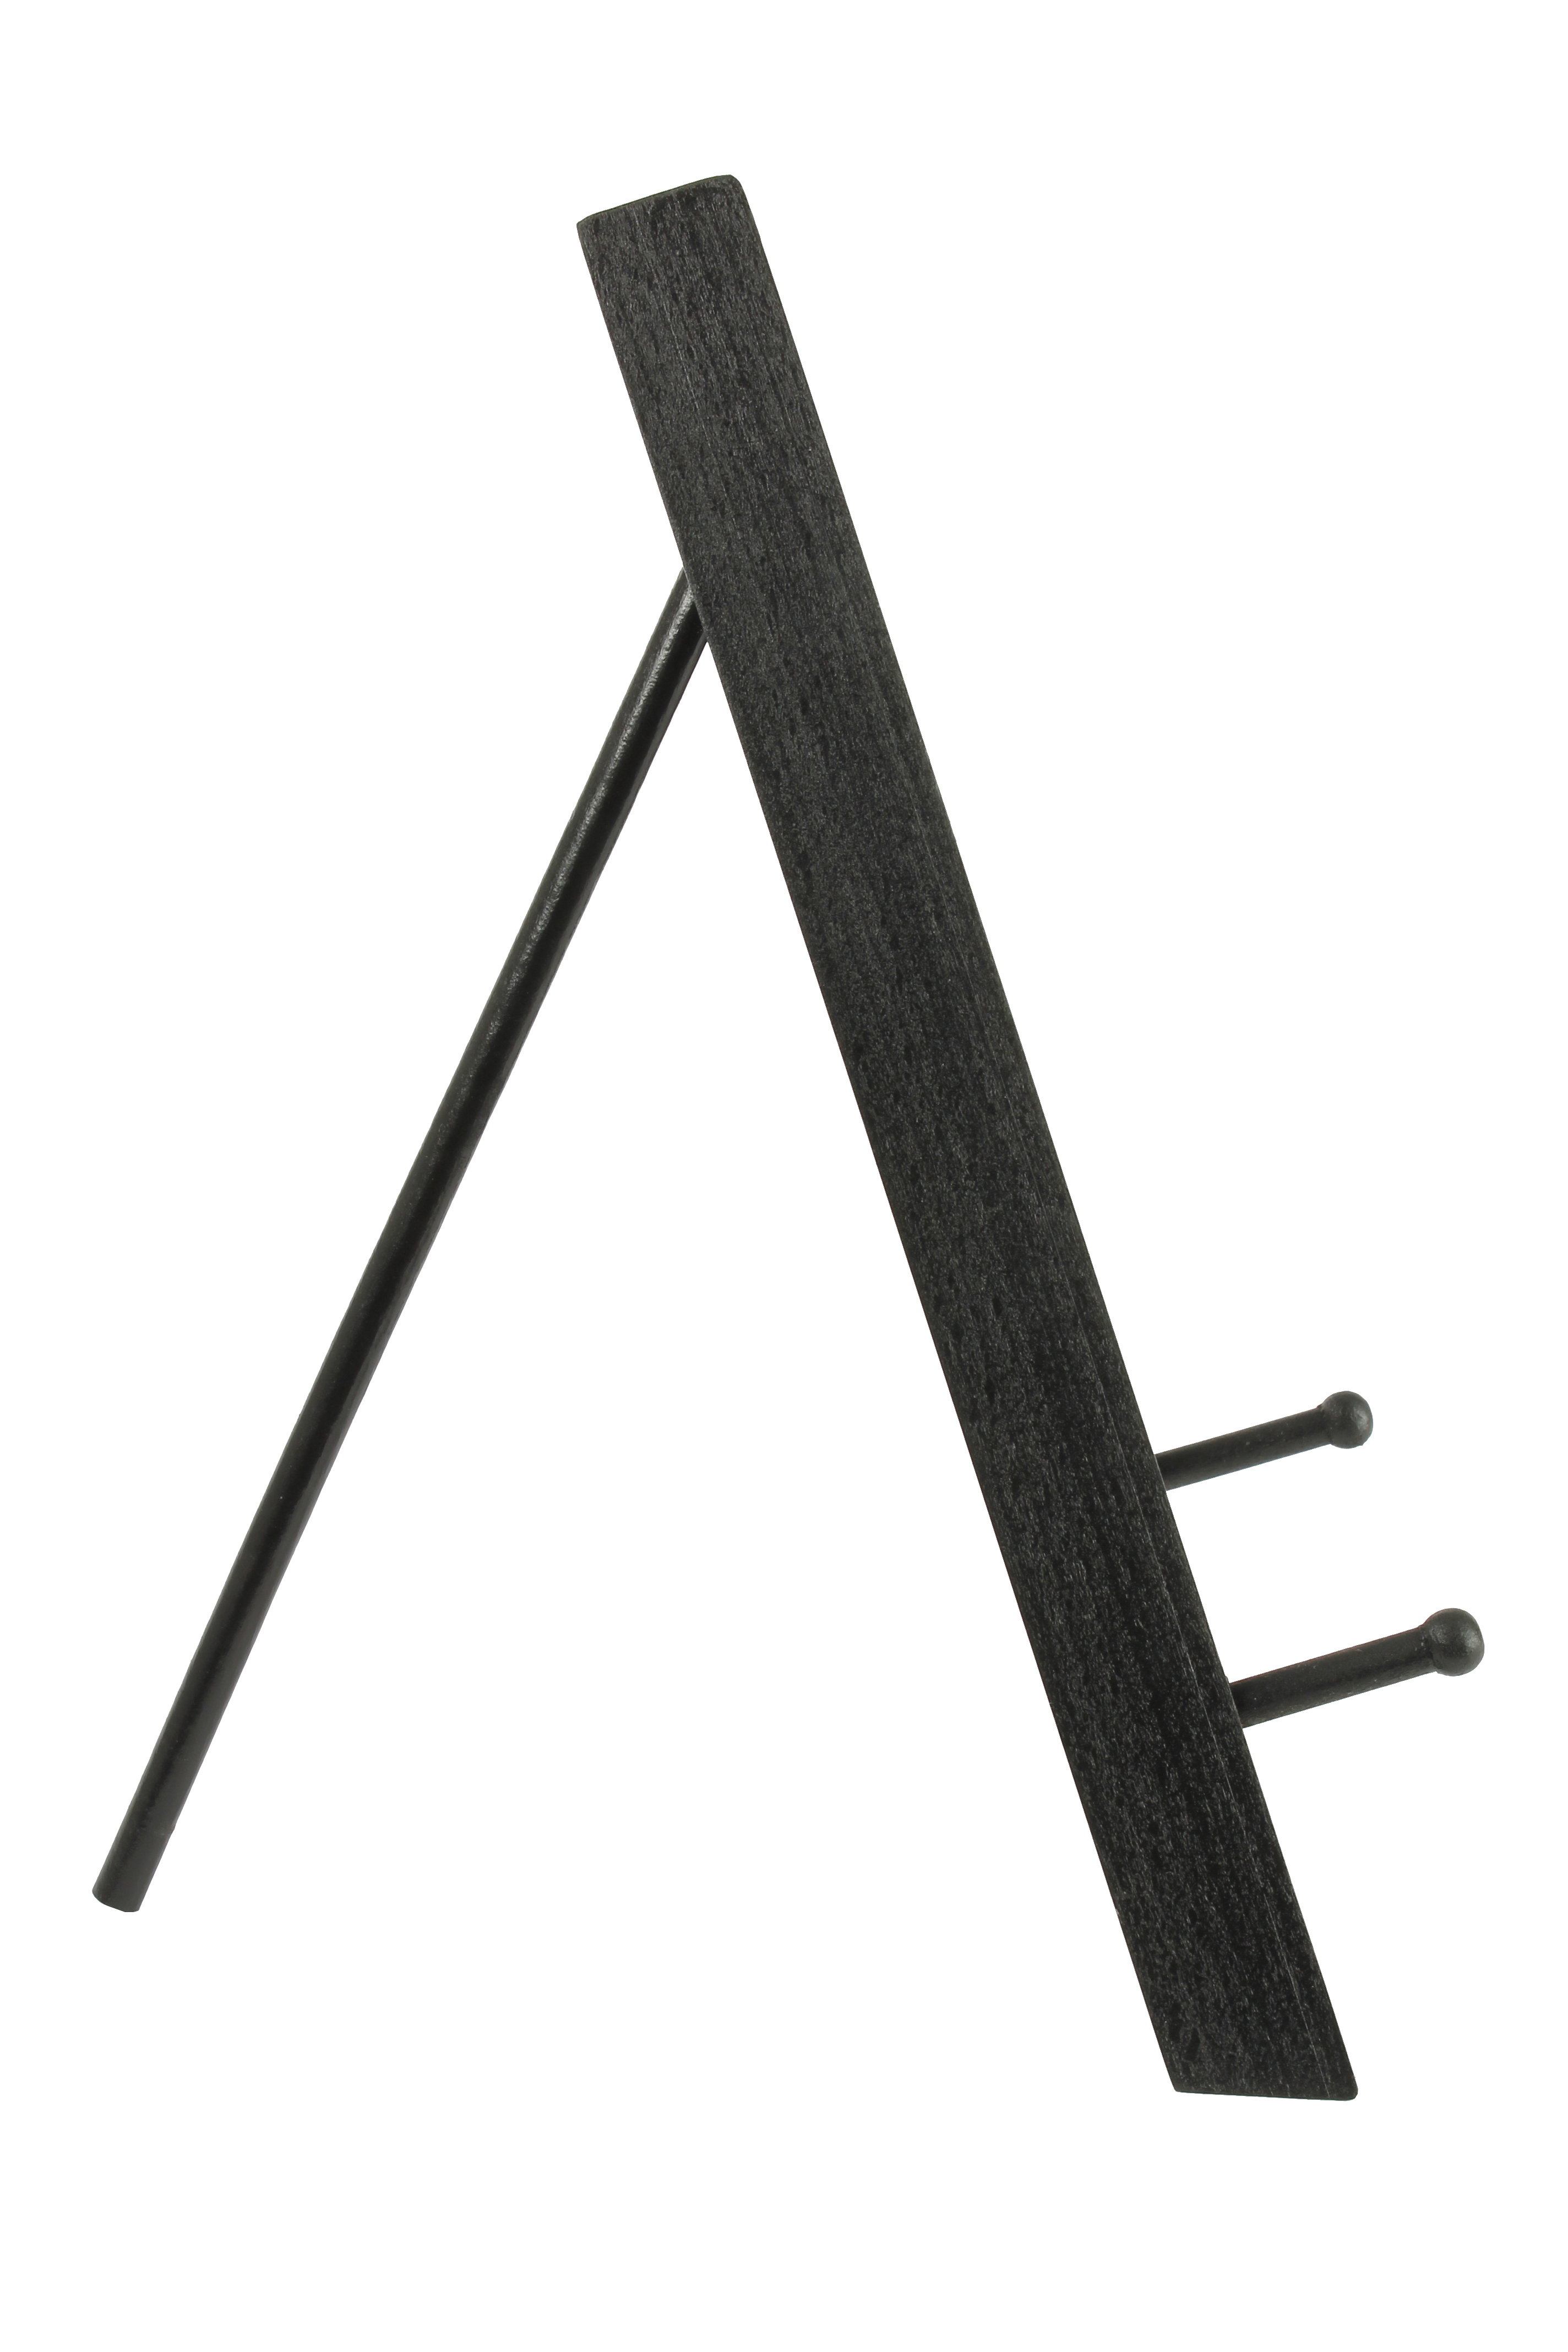 Wooden Easel Stands for Desktop or Tabletop (Black, 9 x 13.5 x 10